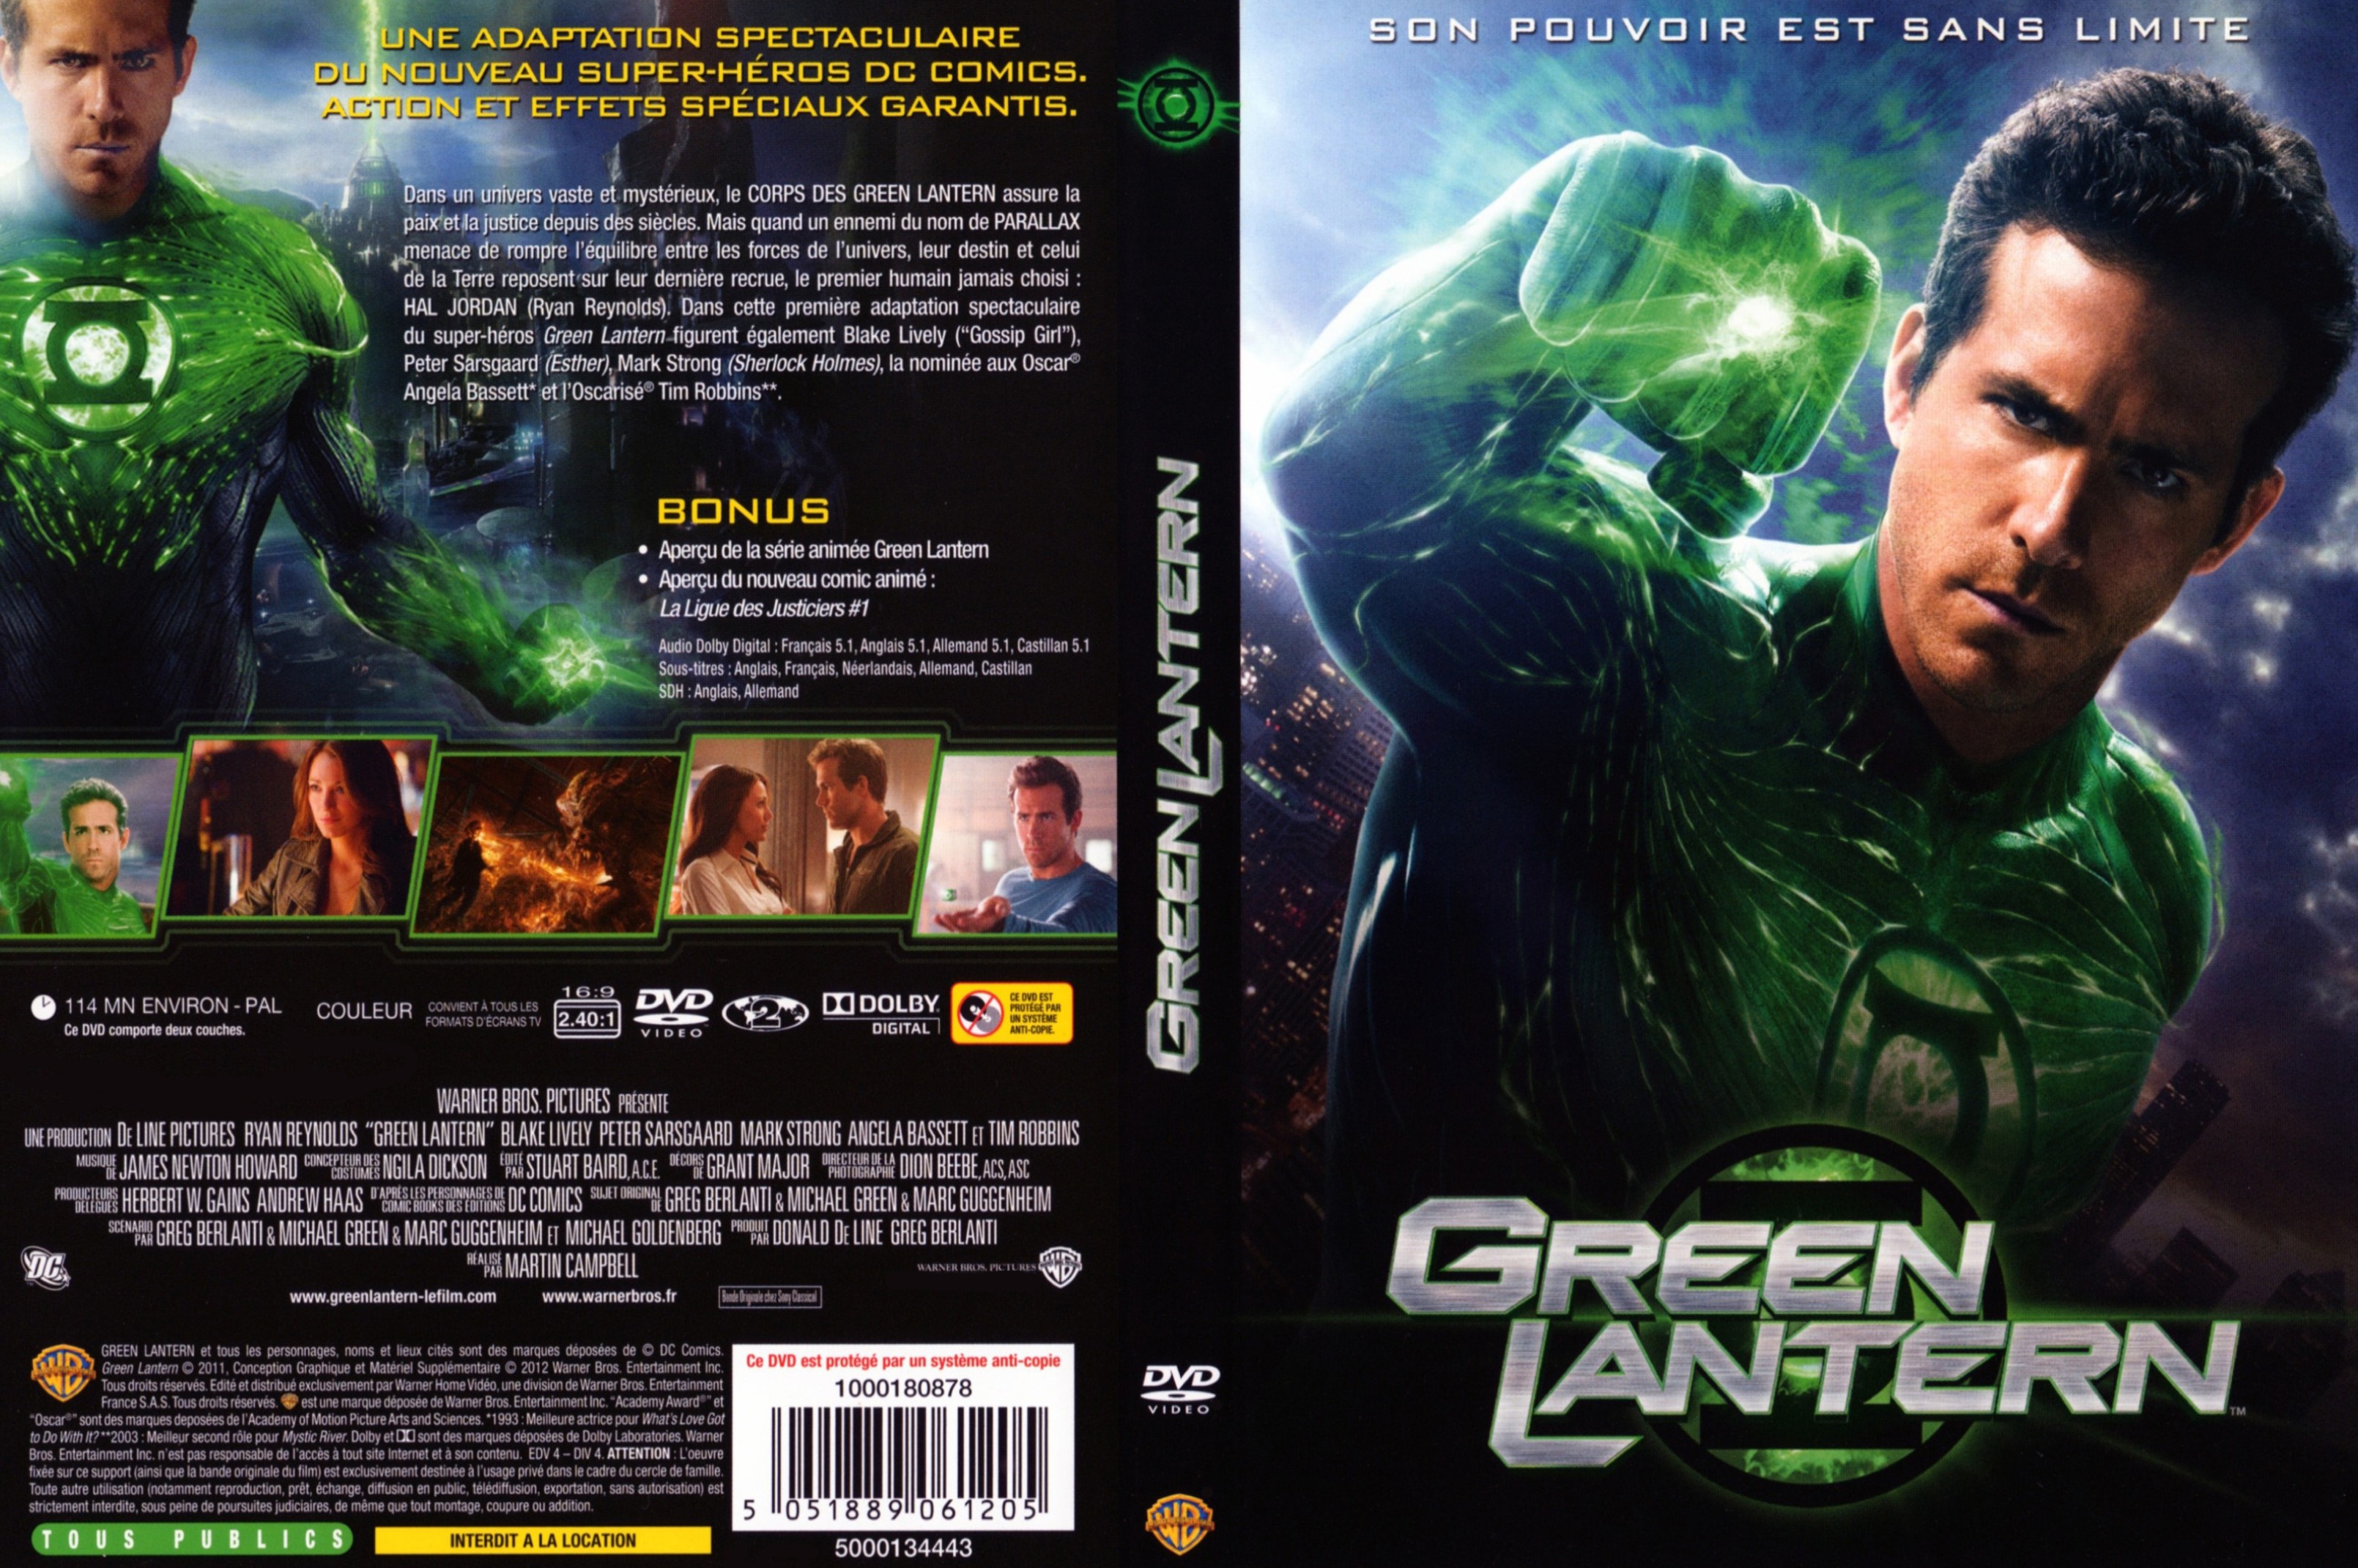 Jaquette DVD Green Lantern